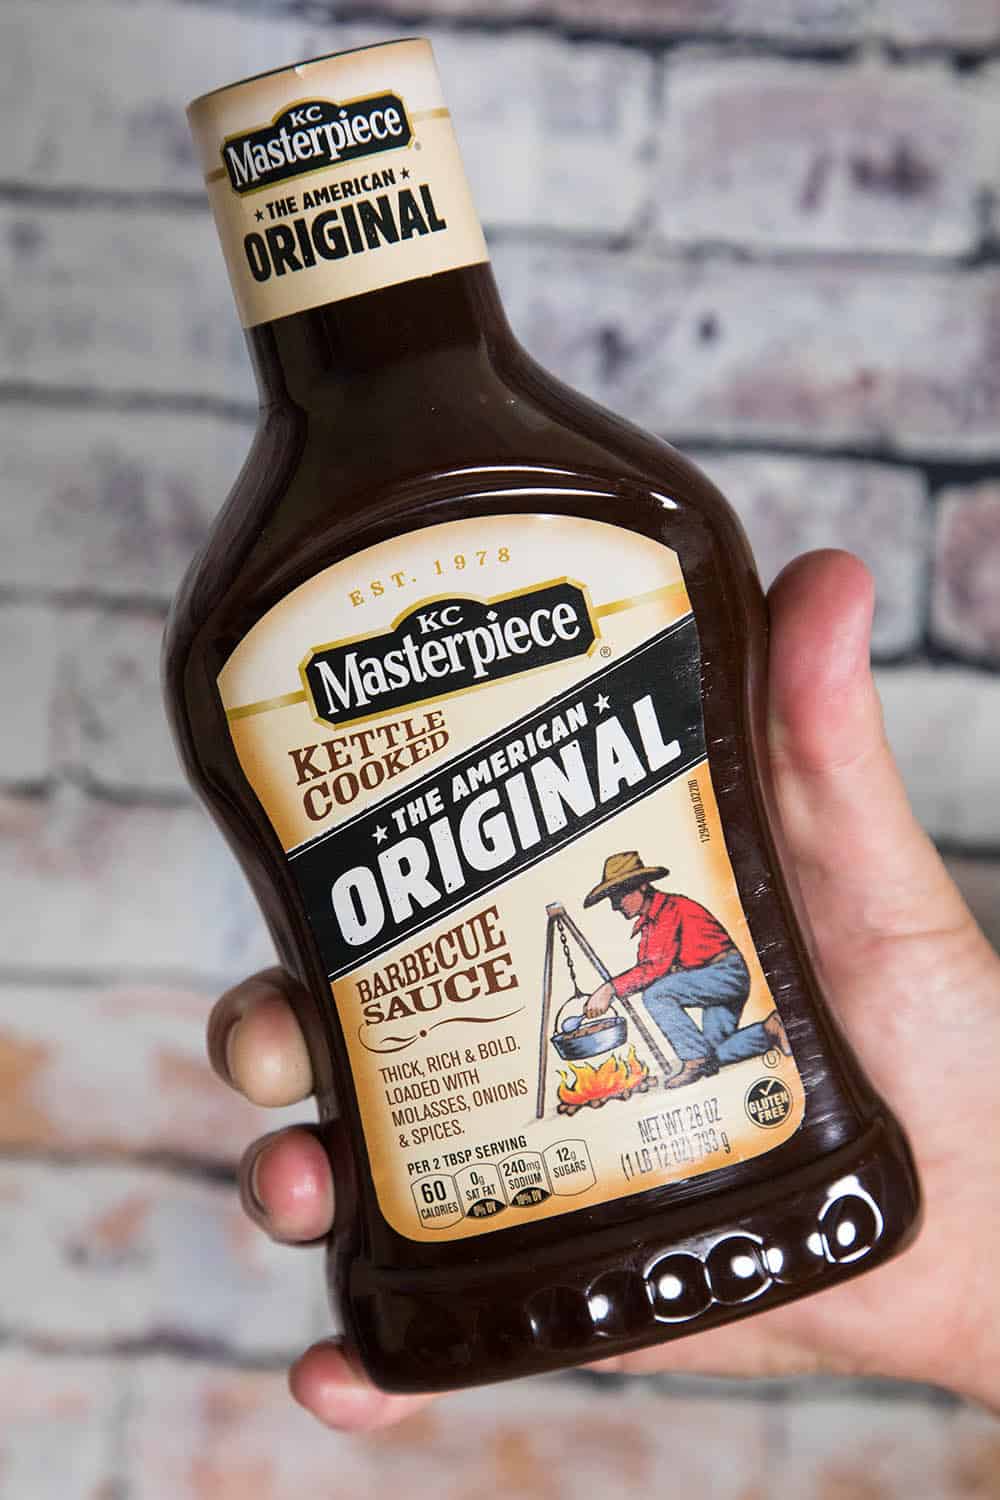 KC Masterpiece Original BBQ Sauce.